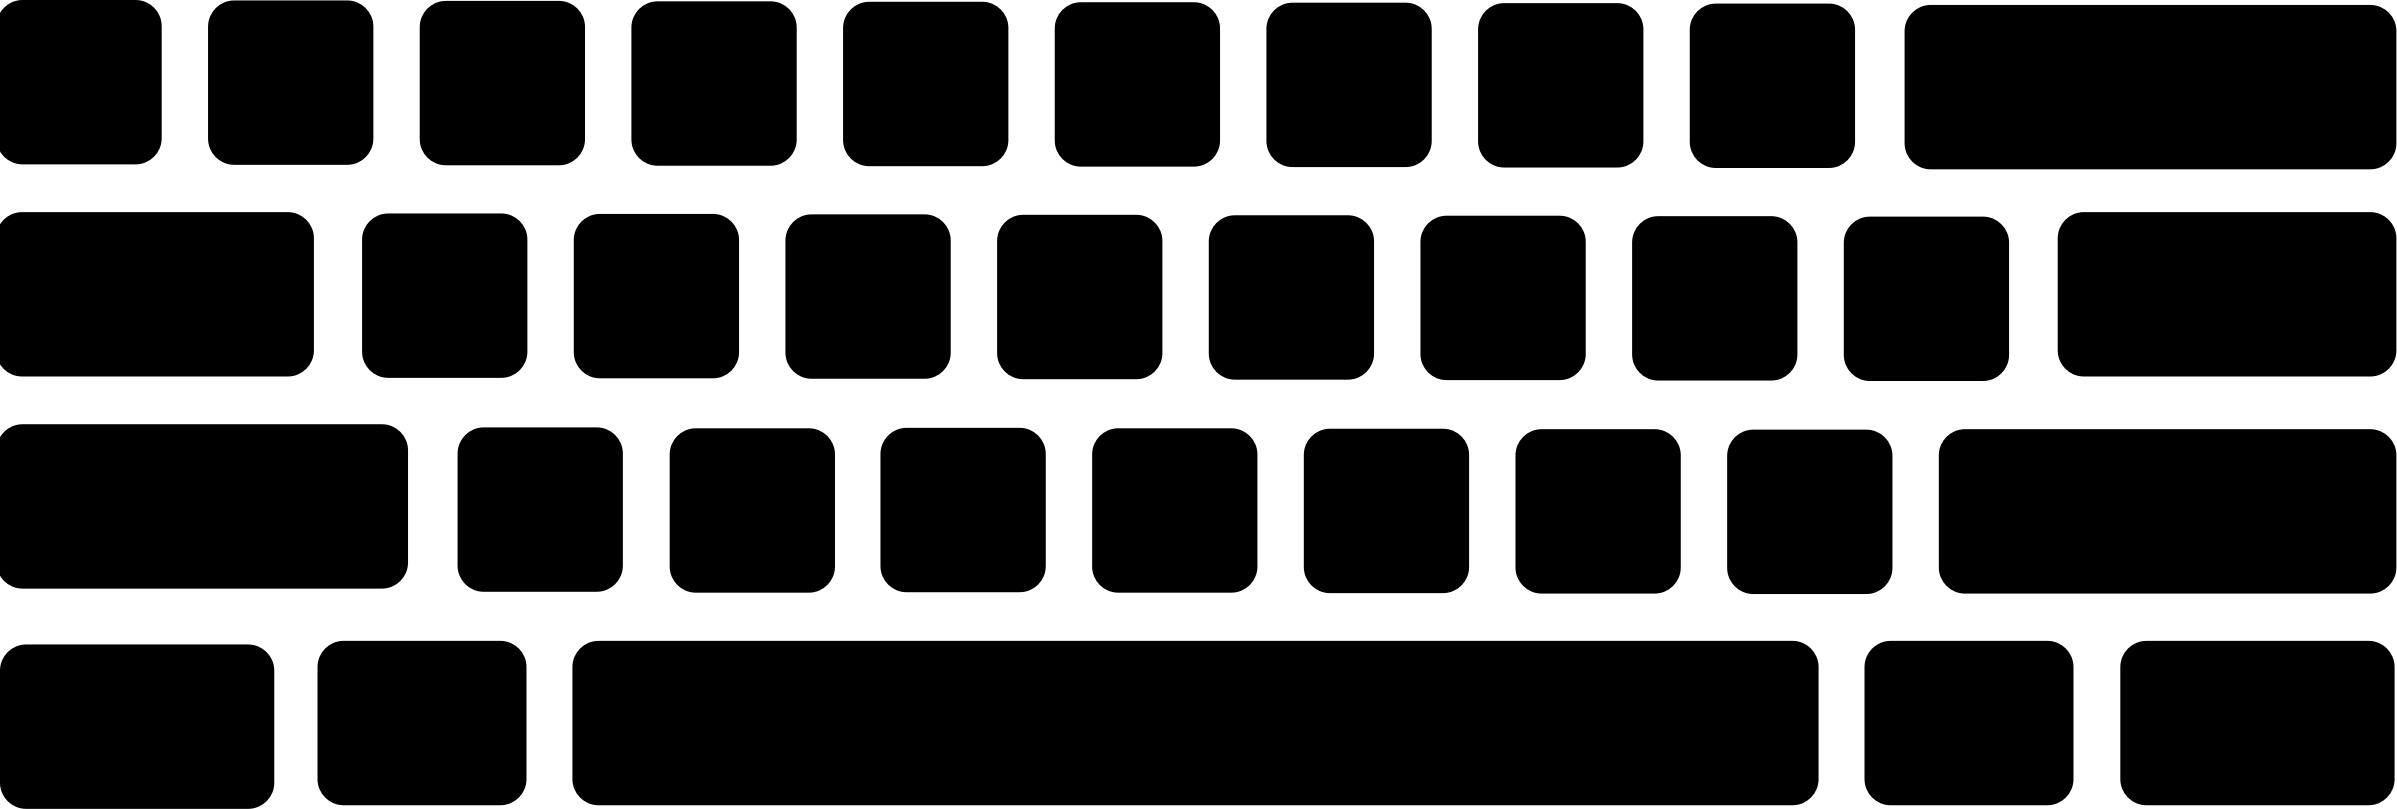 Computer Keyboard png